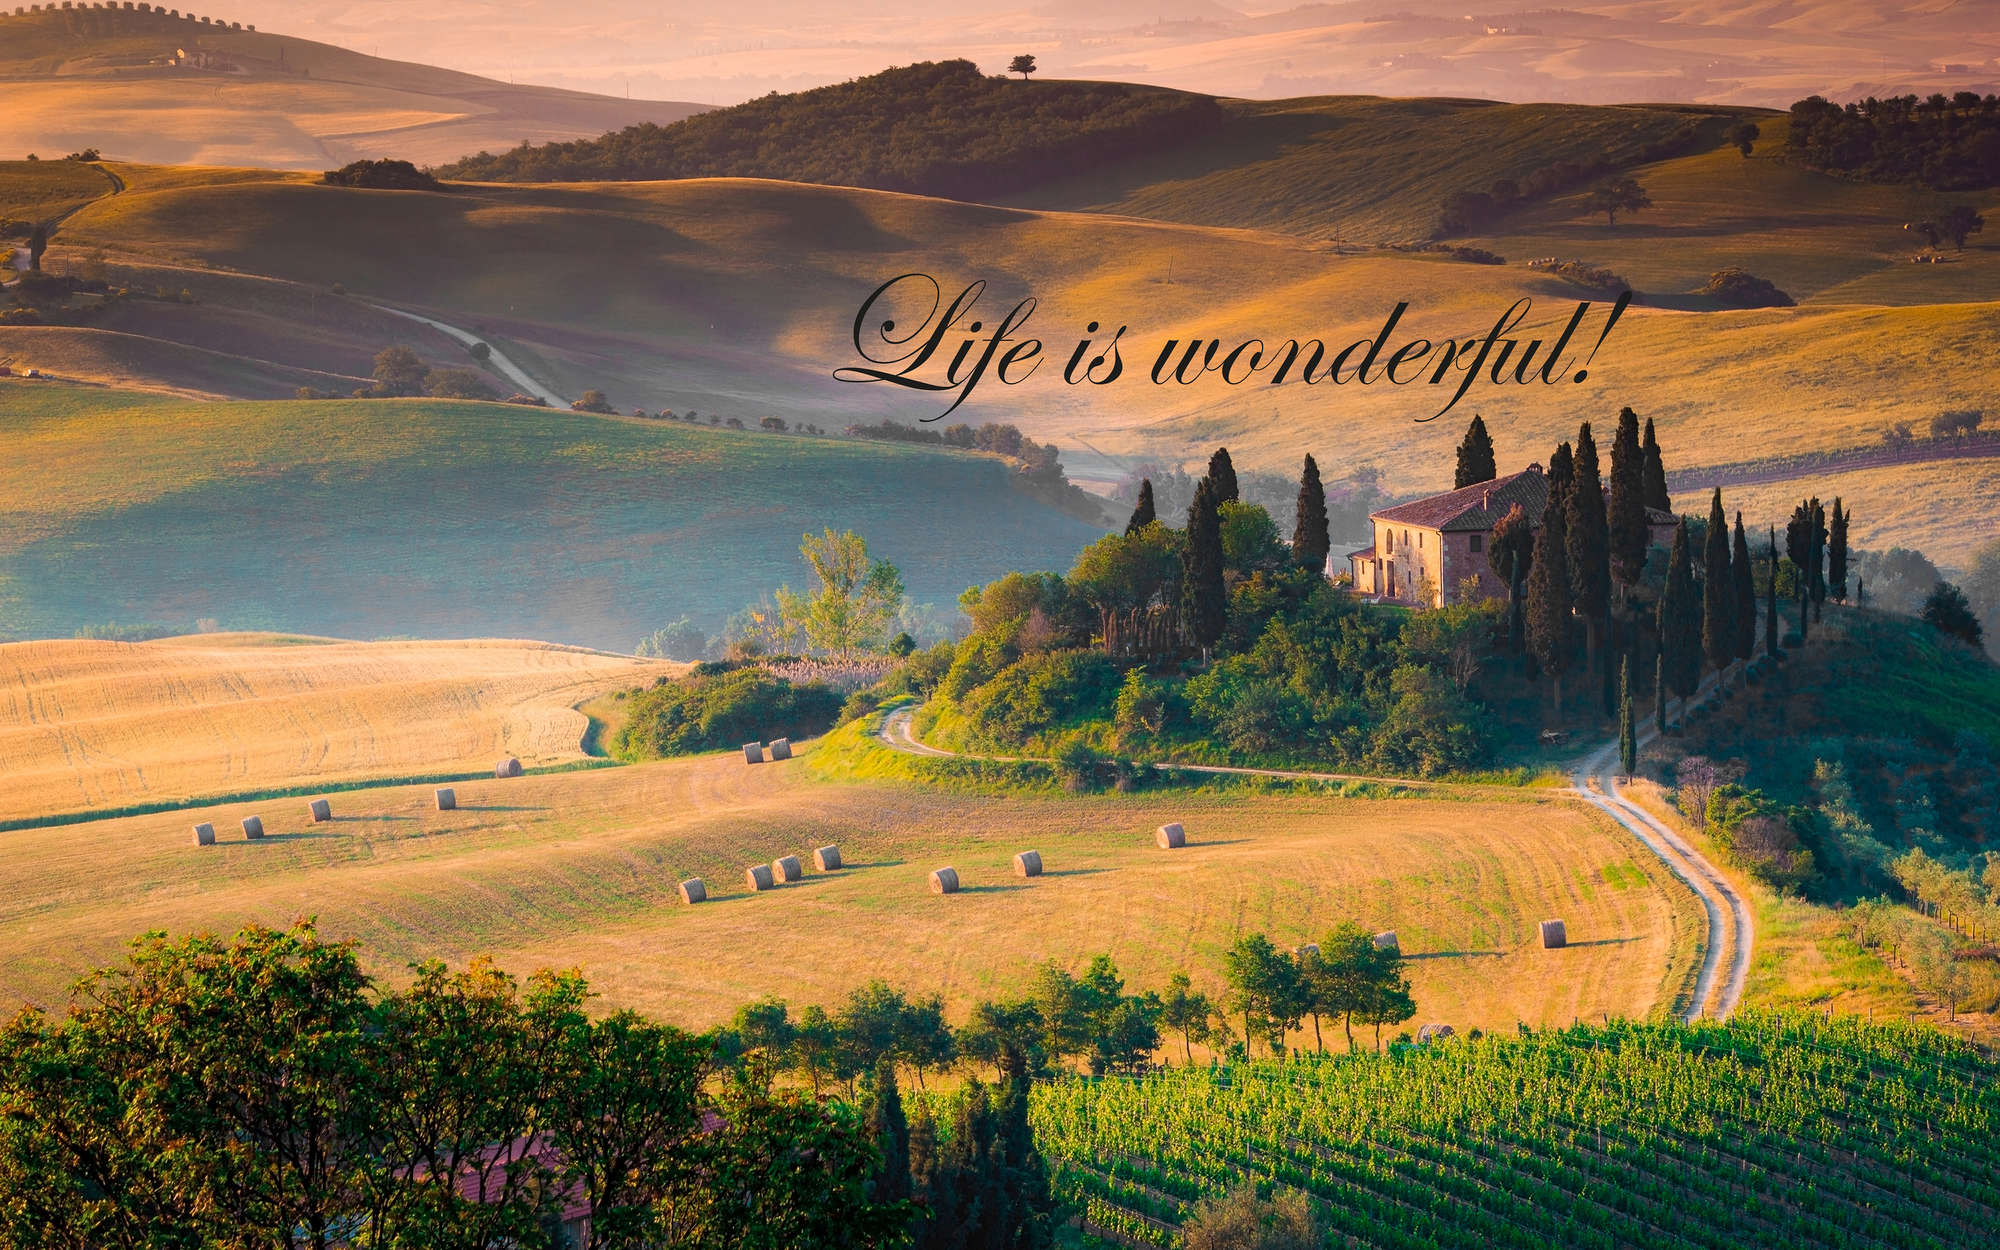             Fototapete Toskana mit Schriftzug "Life is wonderful!" – Strukturiertes Vlies
        